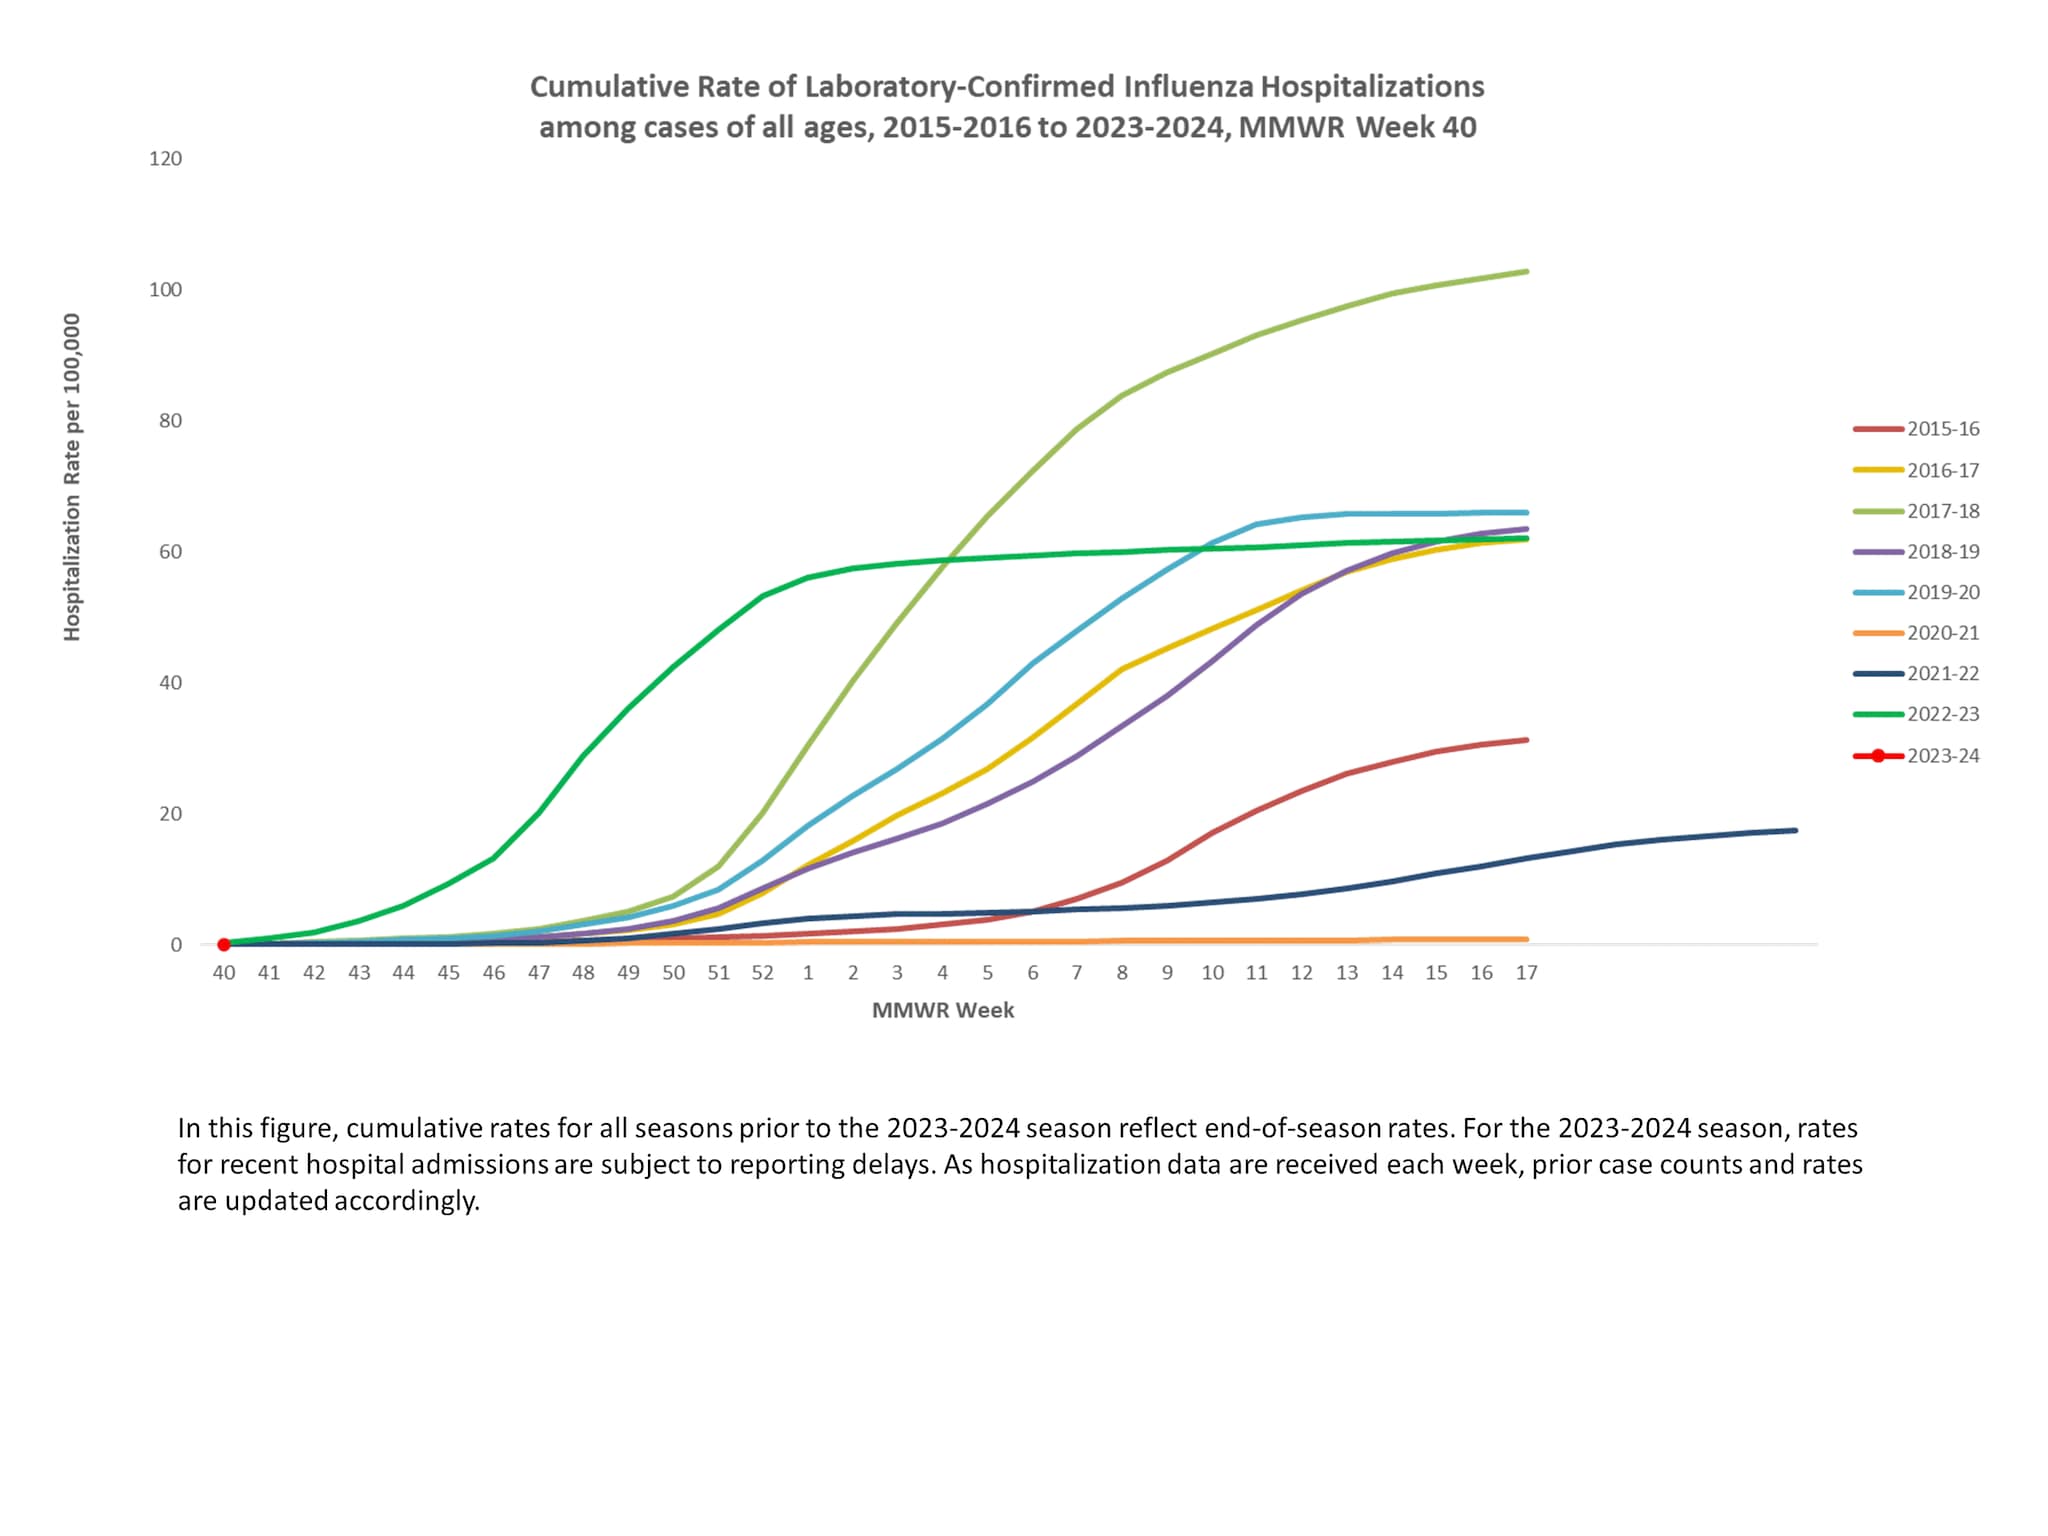 FluSurv-Net Laboratory Confirmed Cumulative Hospitalization Rates (per 100,000), Season 2023-24 Season